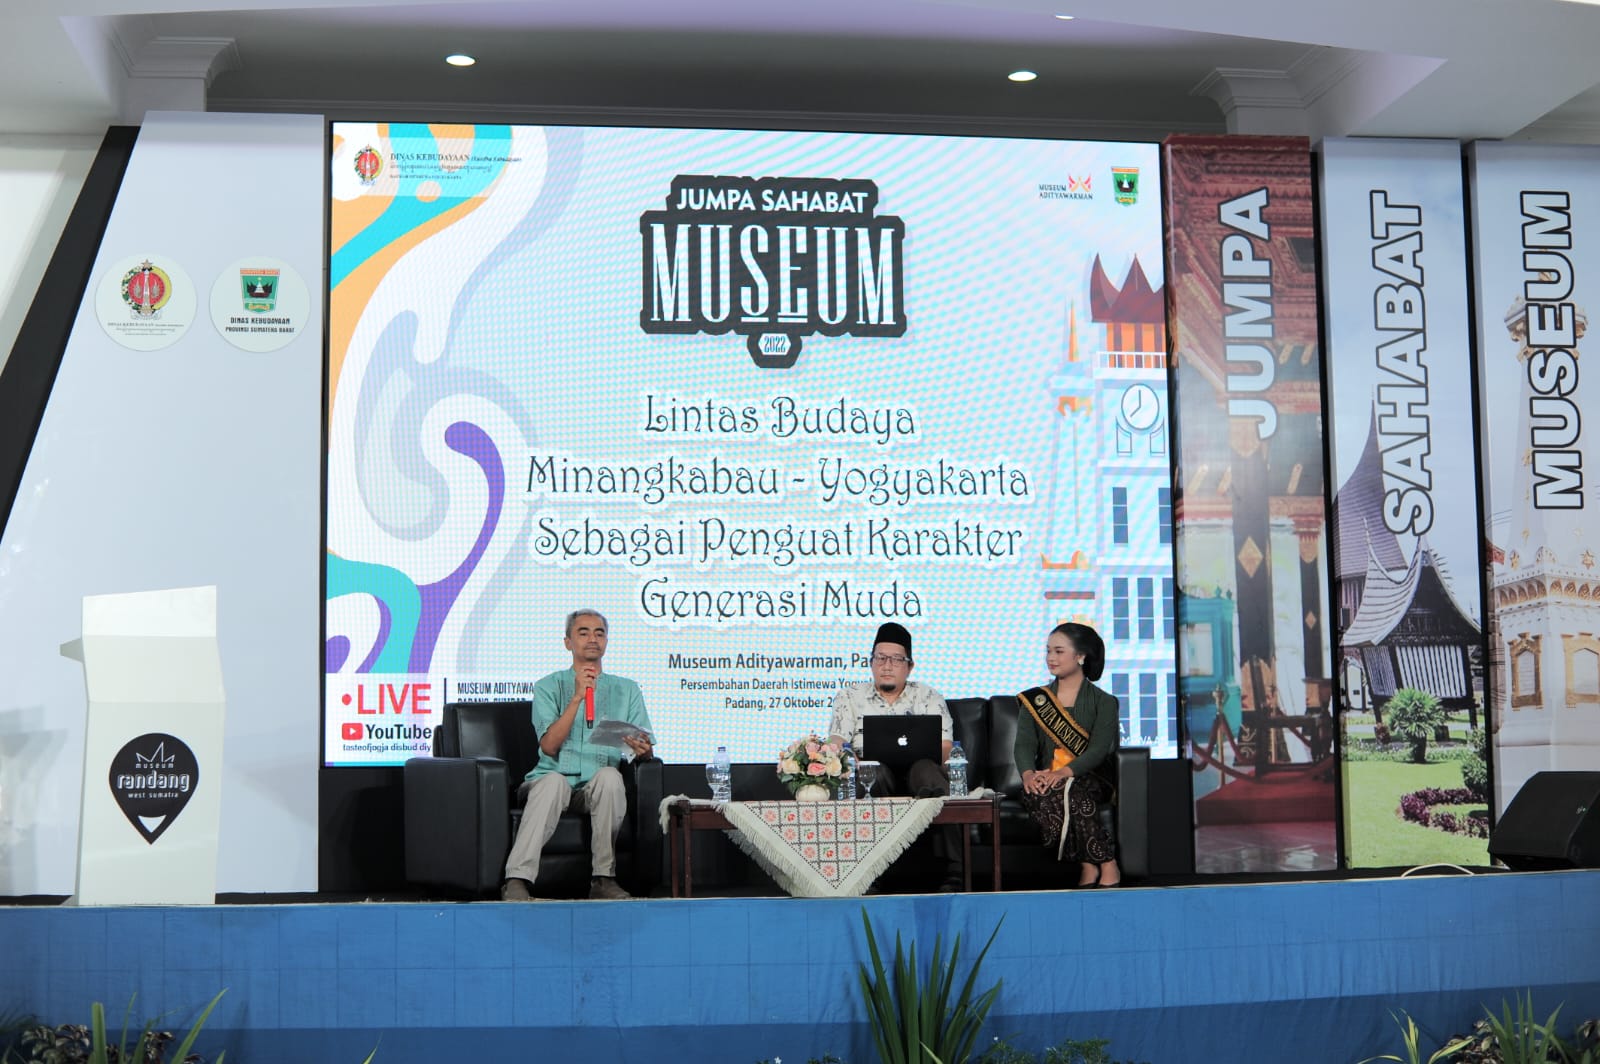 Foto Jumpa Sahabat Museum, Kuatkan Karakter Generasi Milenial lewat Lintas Budaya Minangkabau-Yogyakarta